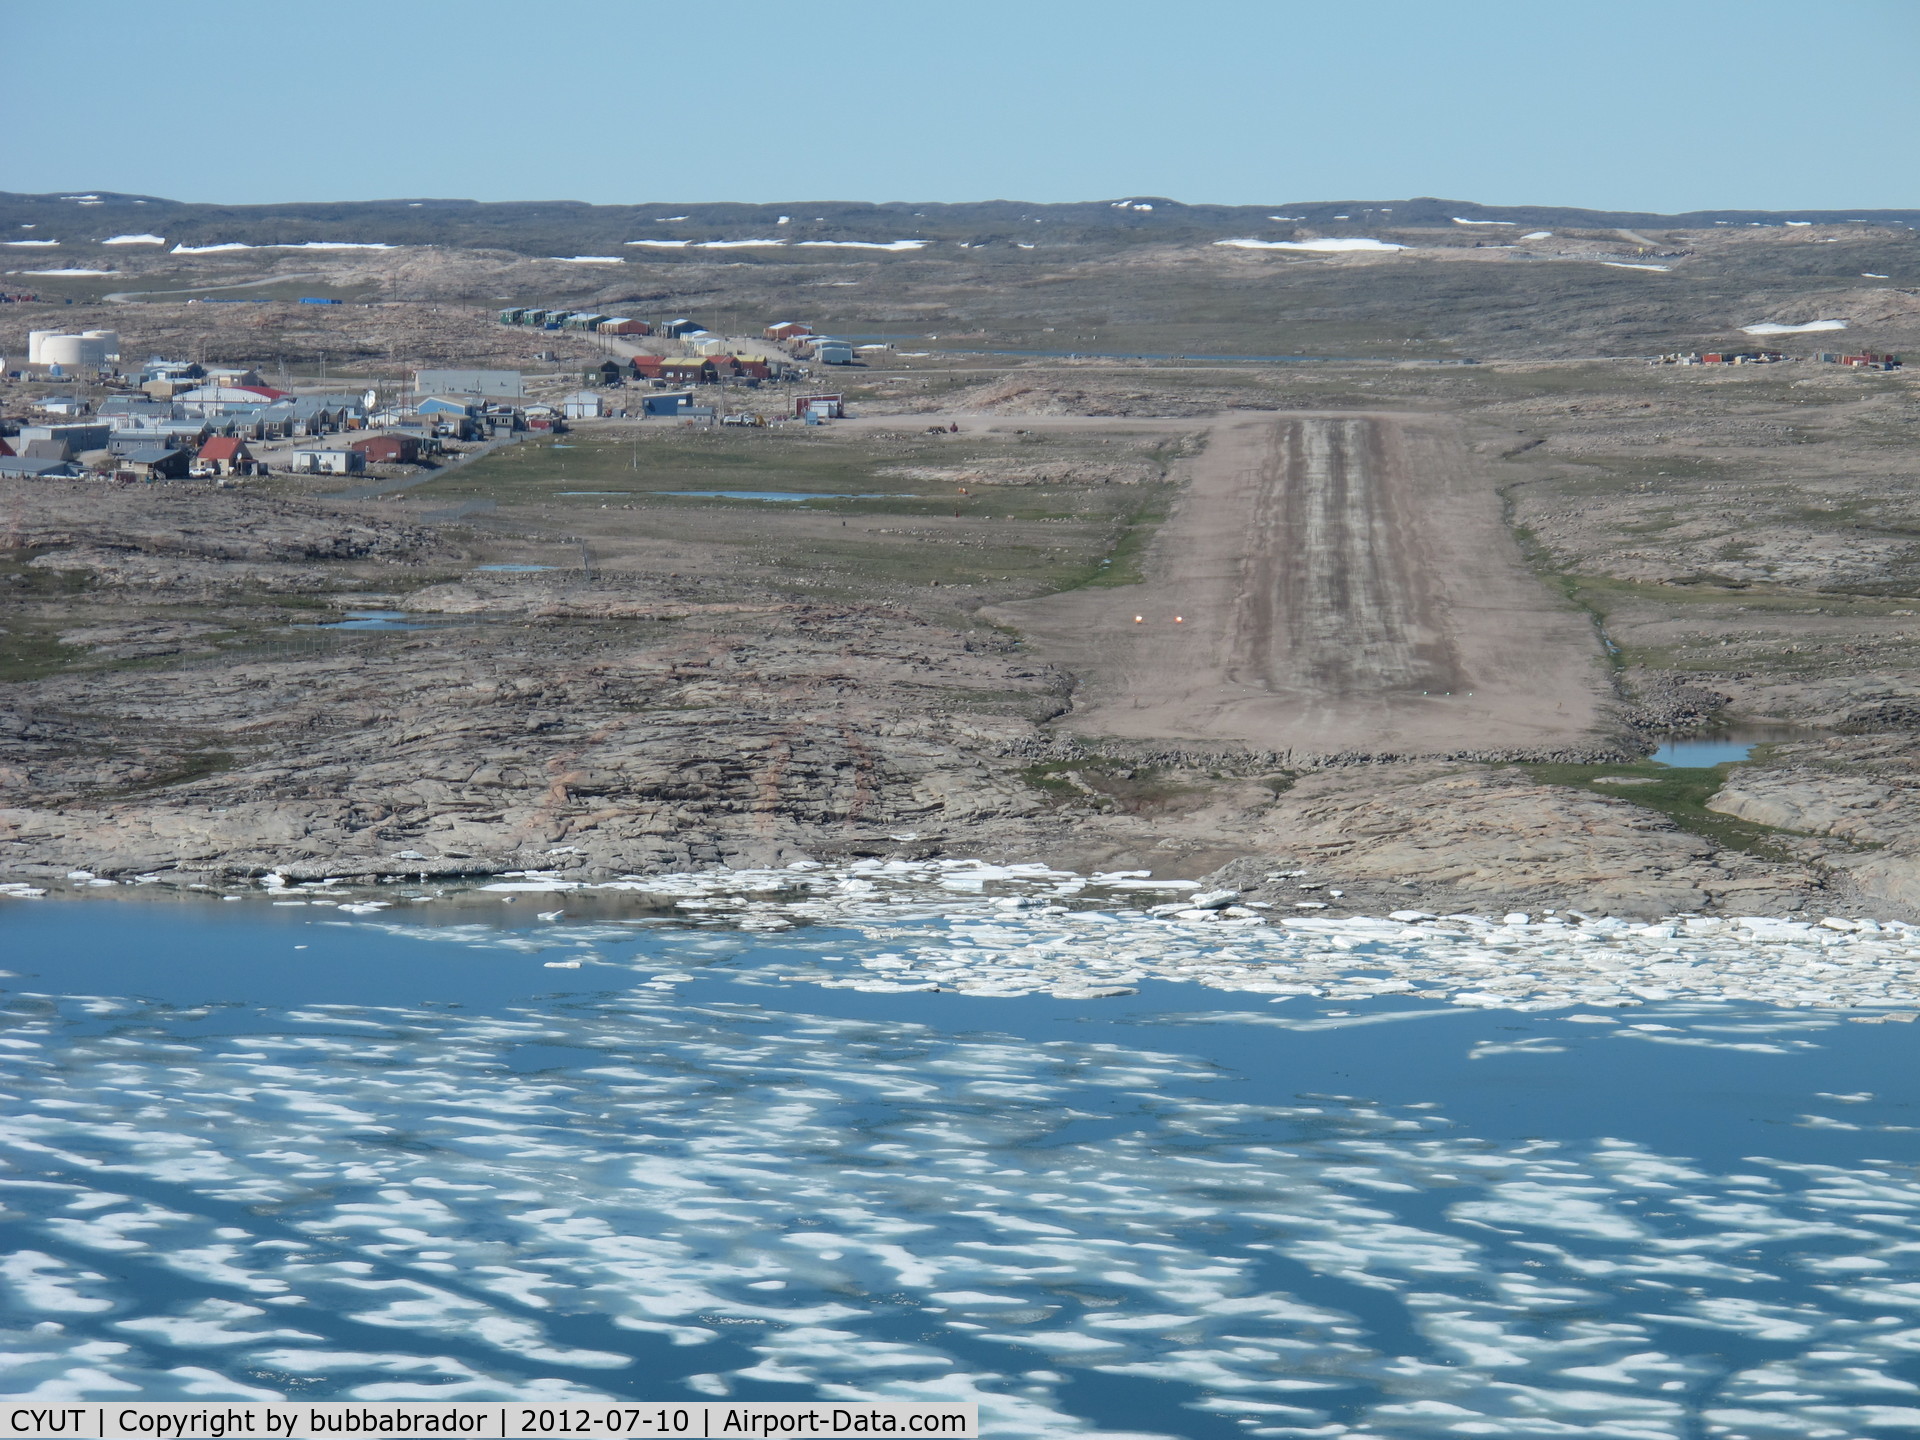 Repulse Bay Airport, Repulse Bay, Nunavut Canada (CYUT) - Repulse Bay Airport